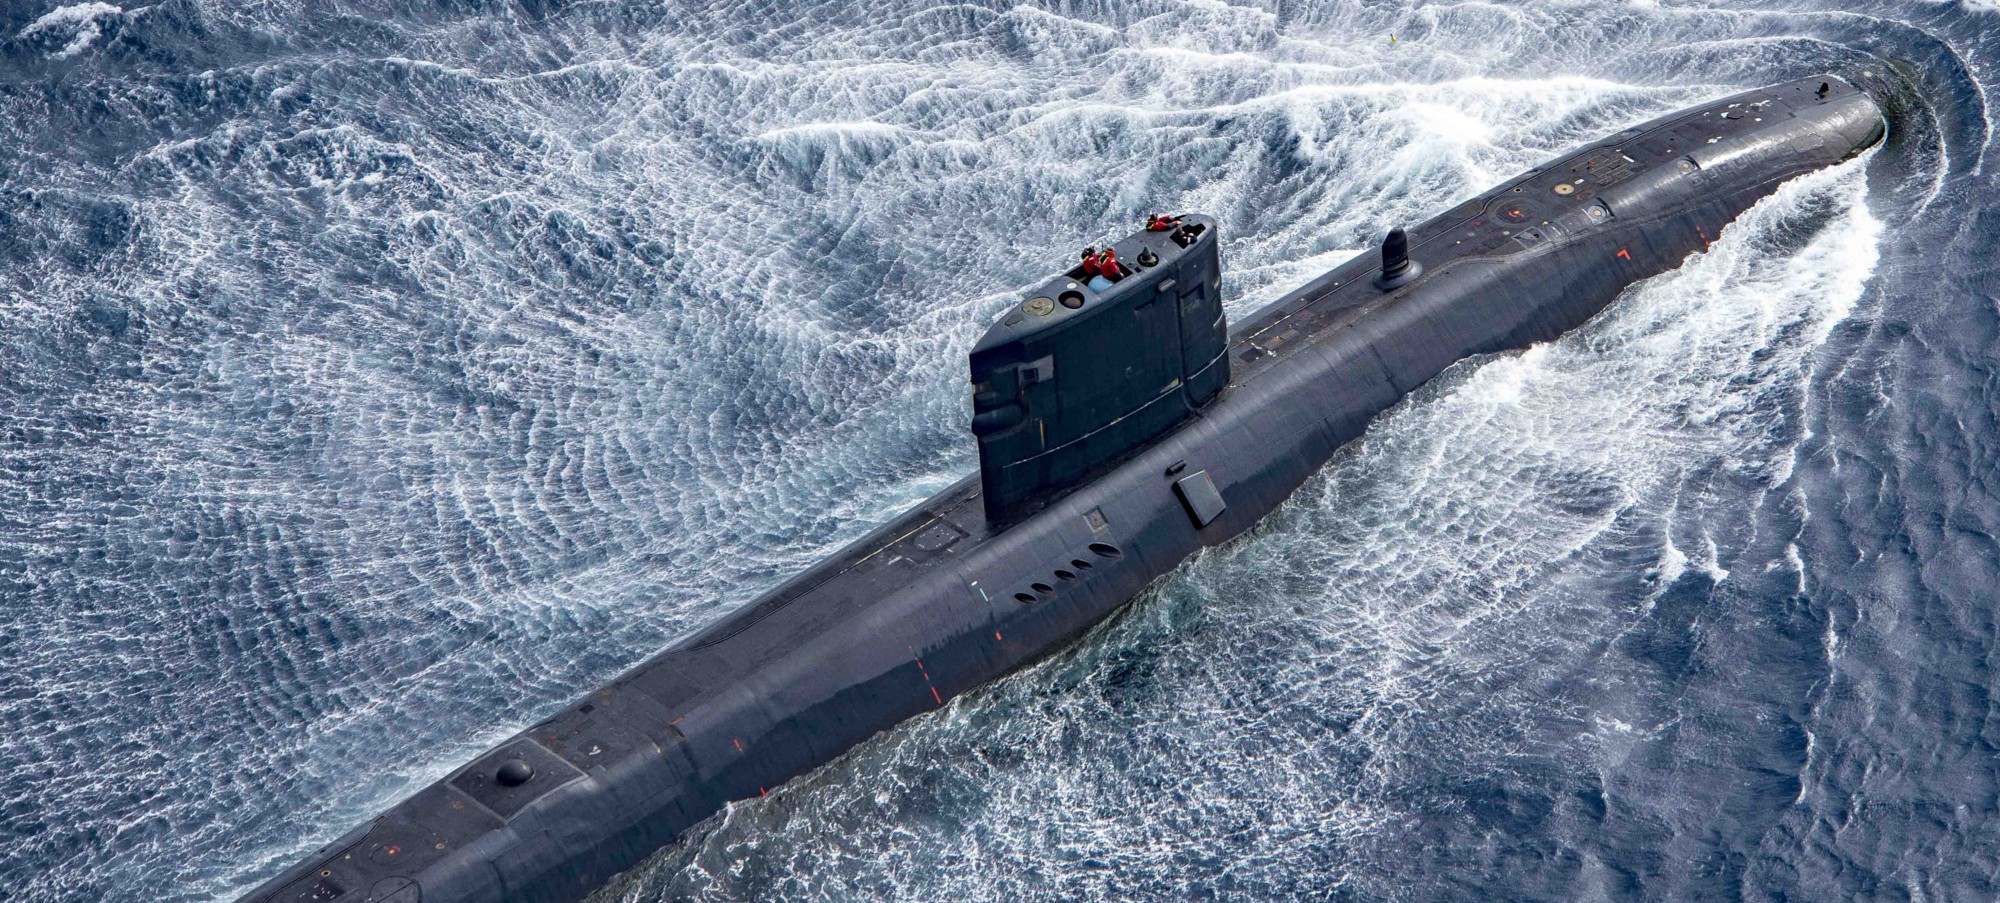 s91 hms trenchant trafalgar class attack submarine hunter killer royal navy 03